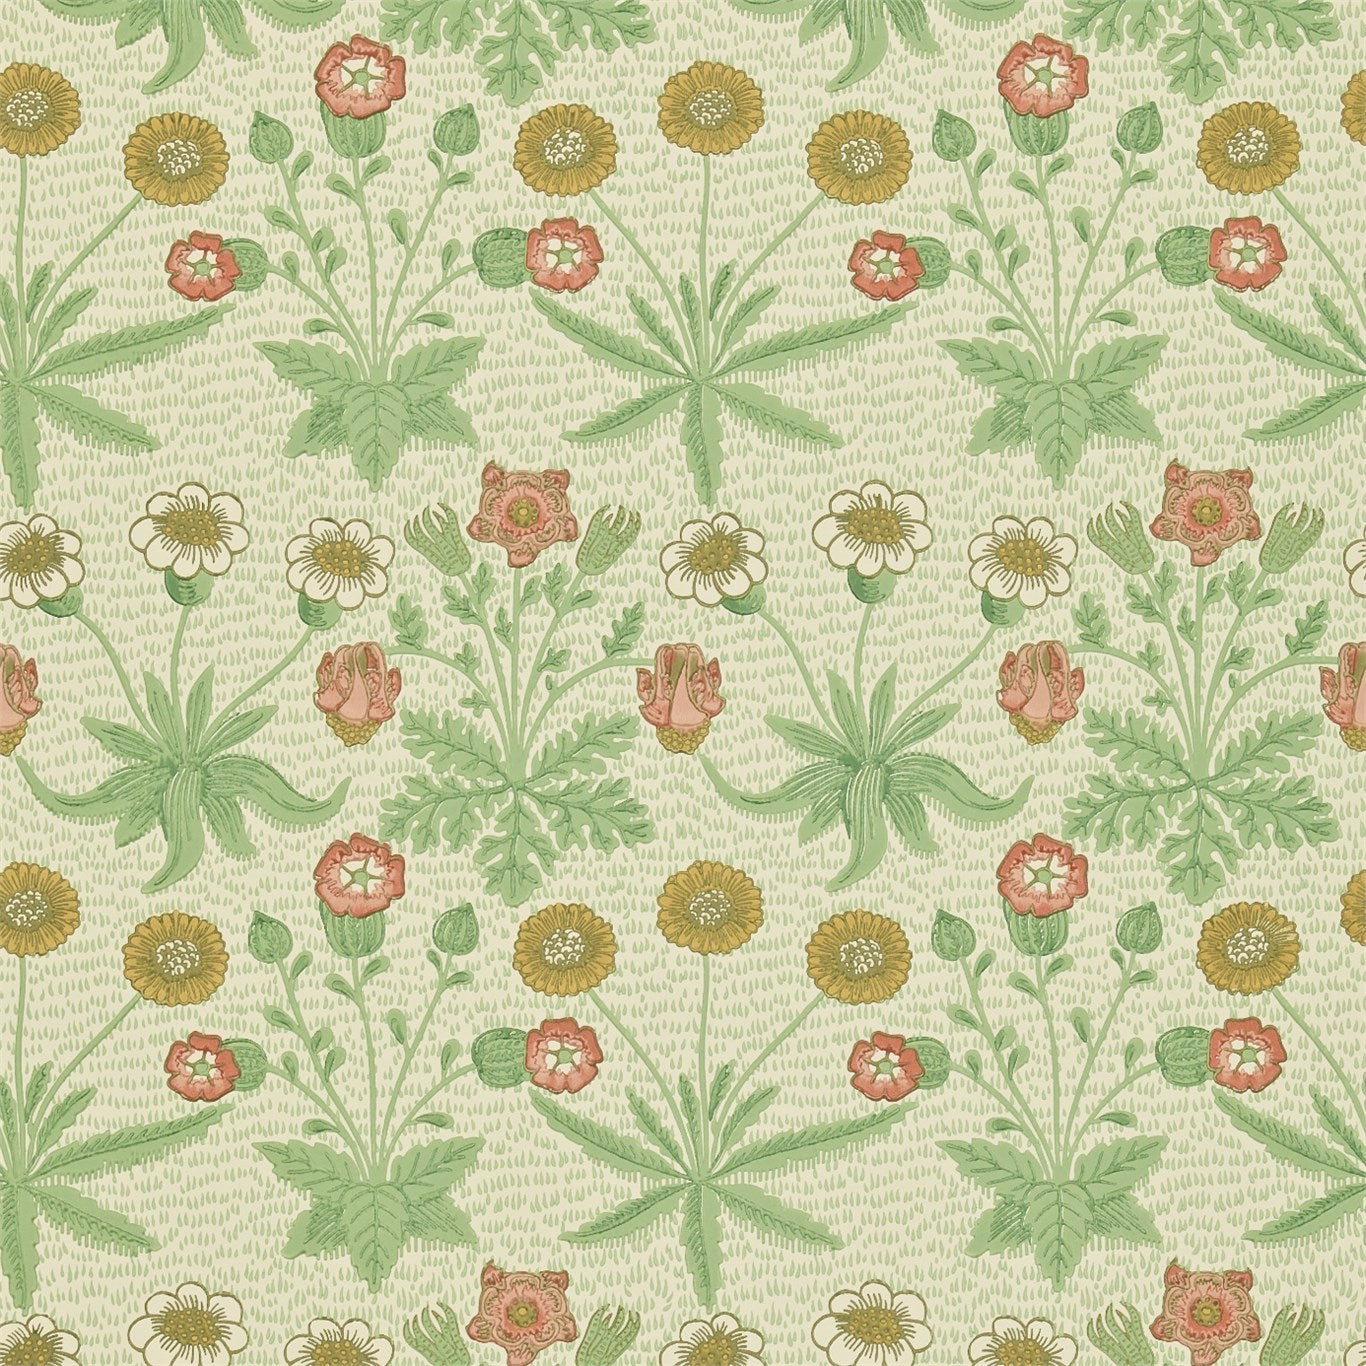 Daisy Wallpaper by Morris & Co